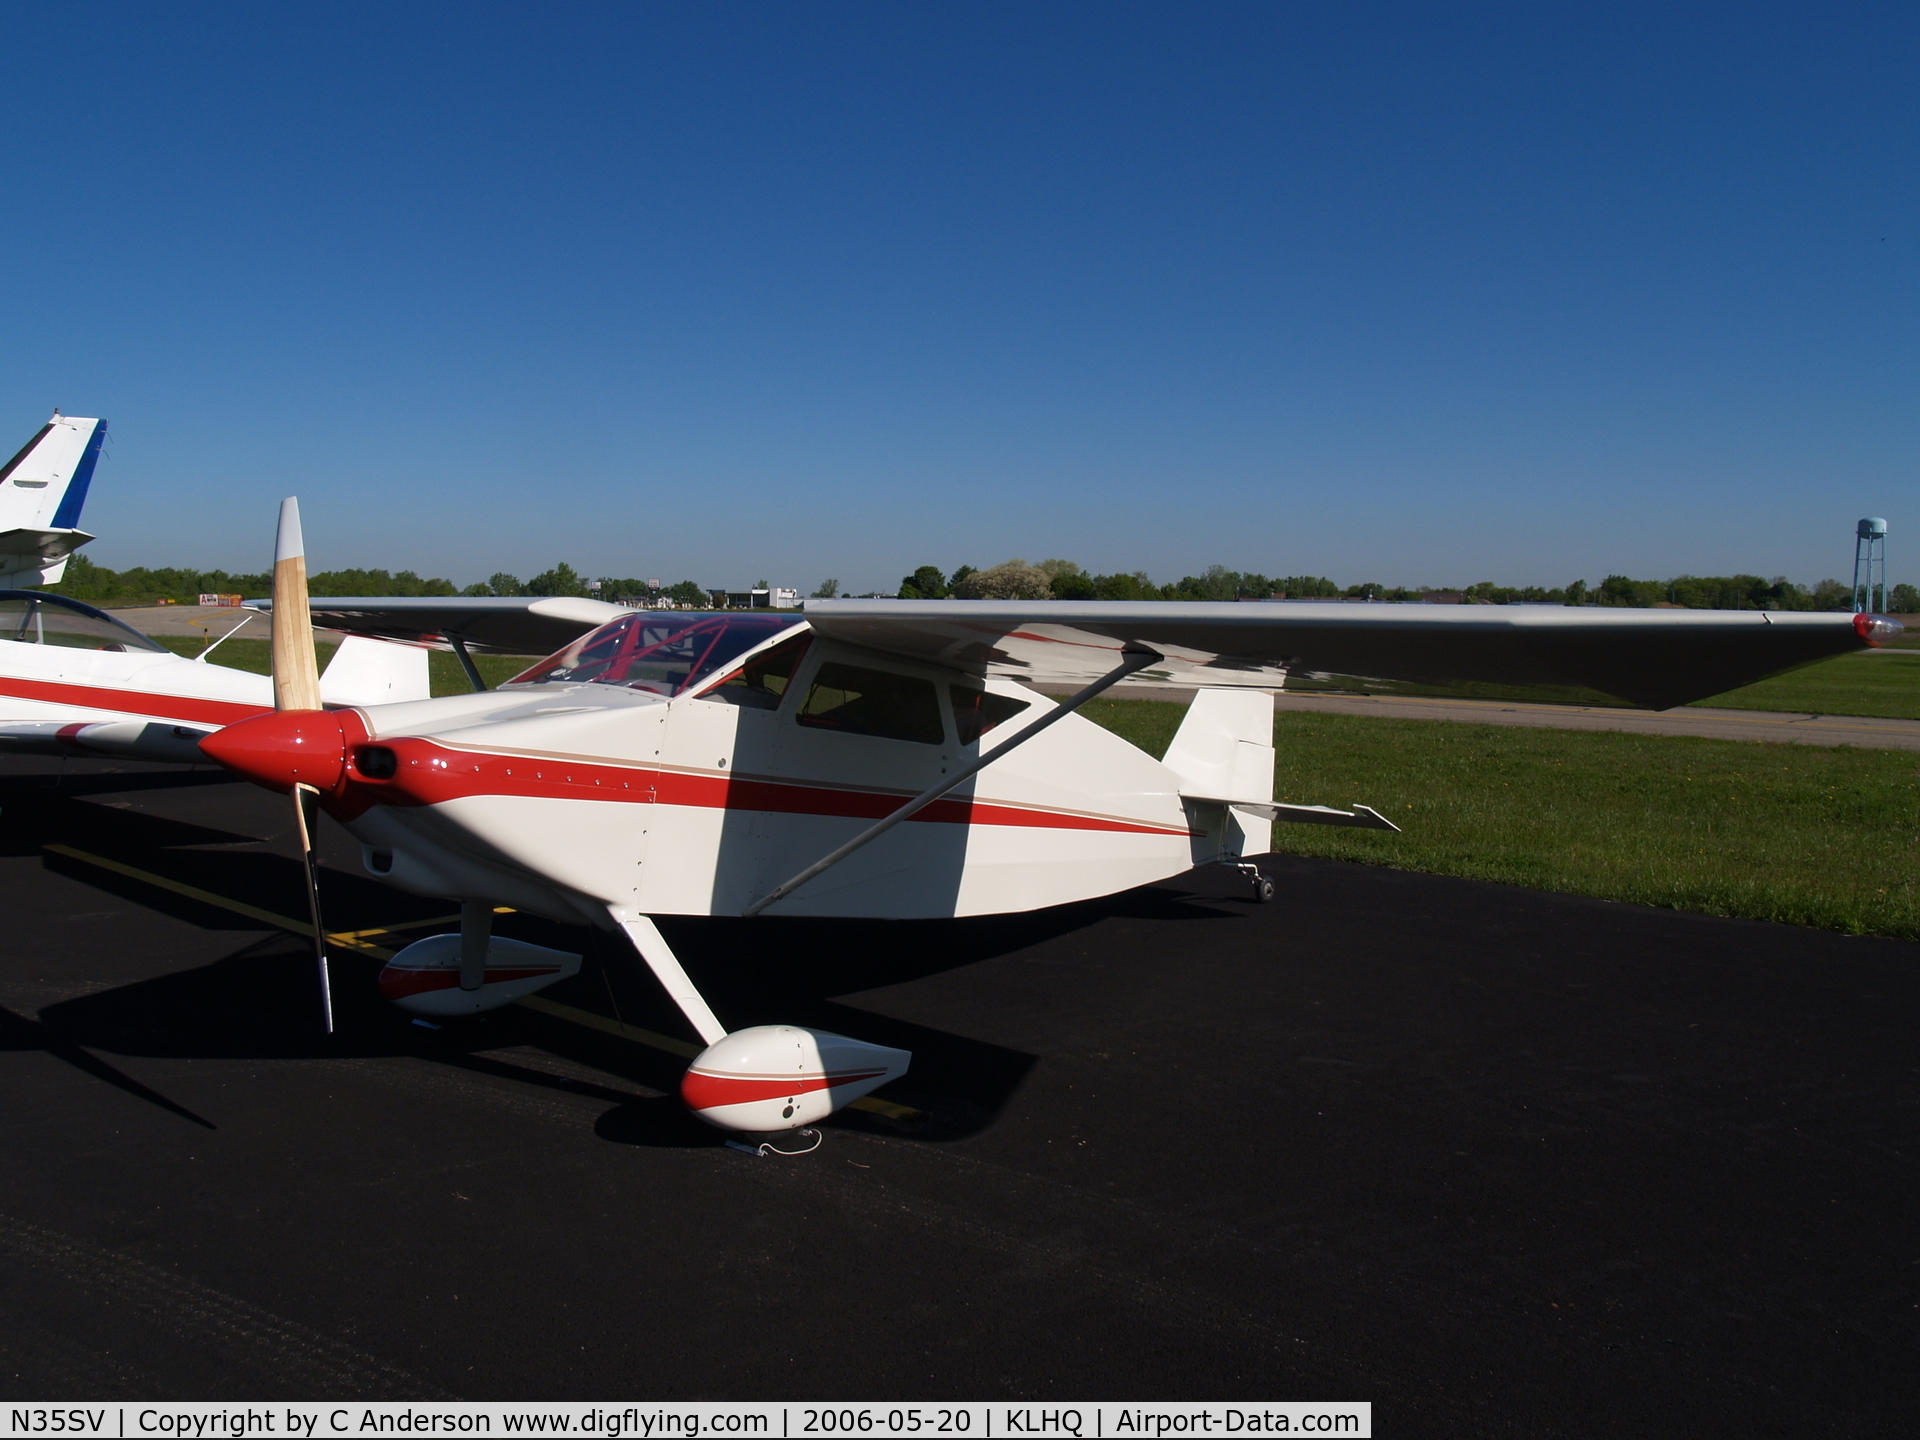 N35SV, 2003 Vaughn W810 C/N 508, Tailwind or W810 at Lancaster Ohio